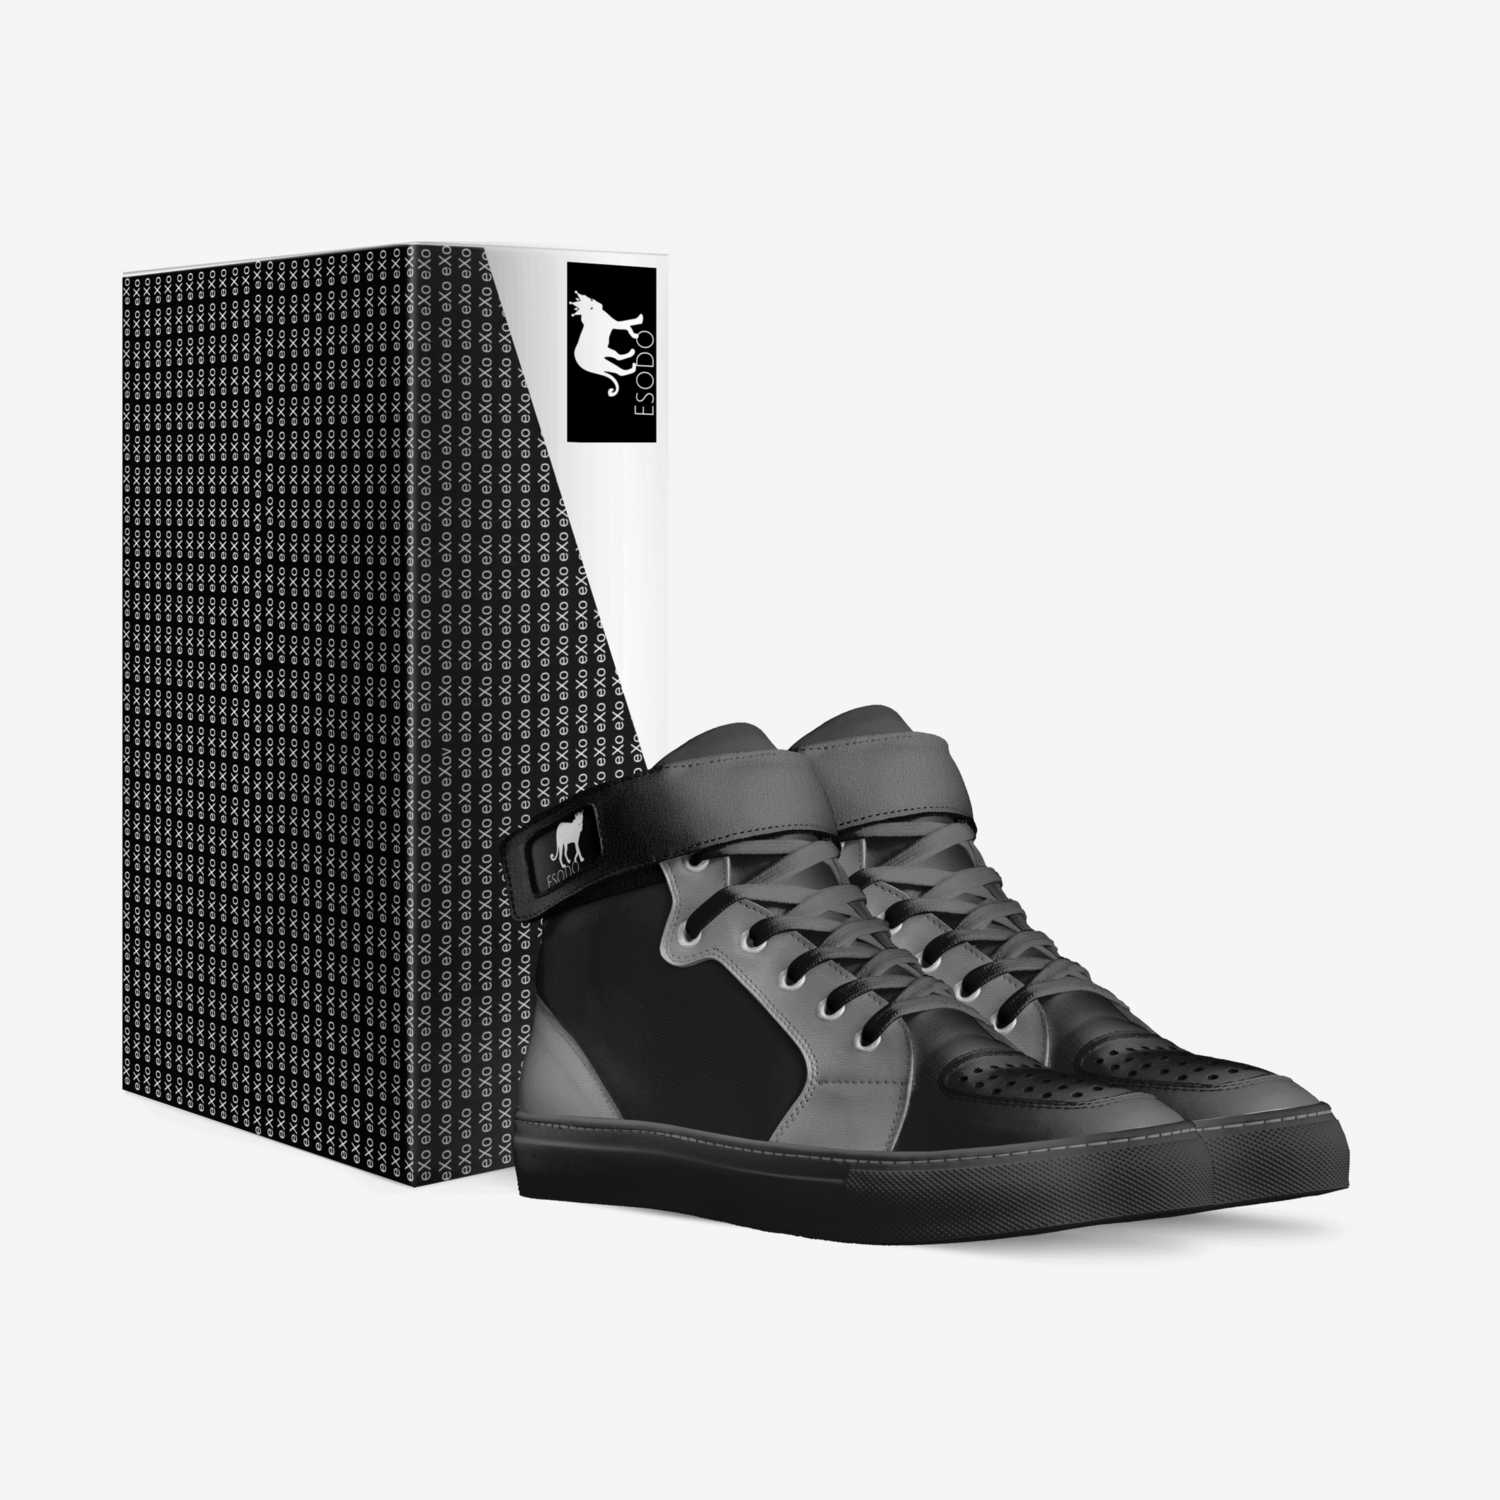 Esodo custom made in Italy shoes by Arthur Silva Pimenta | Box view